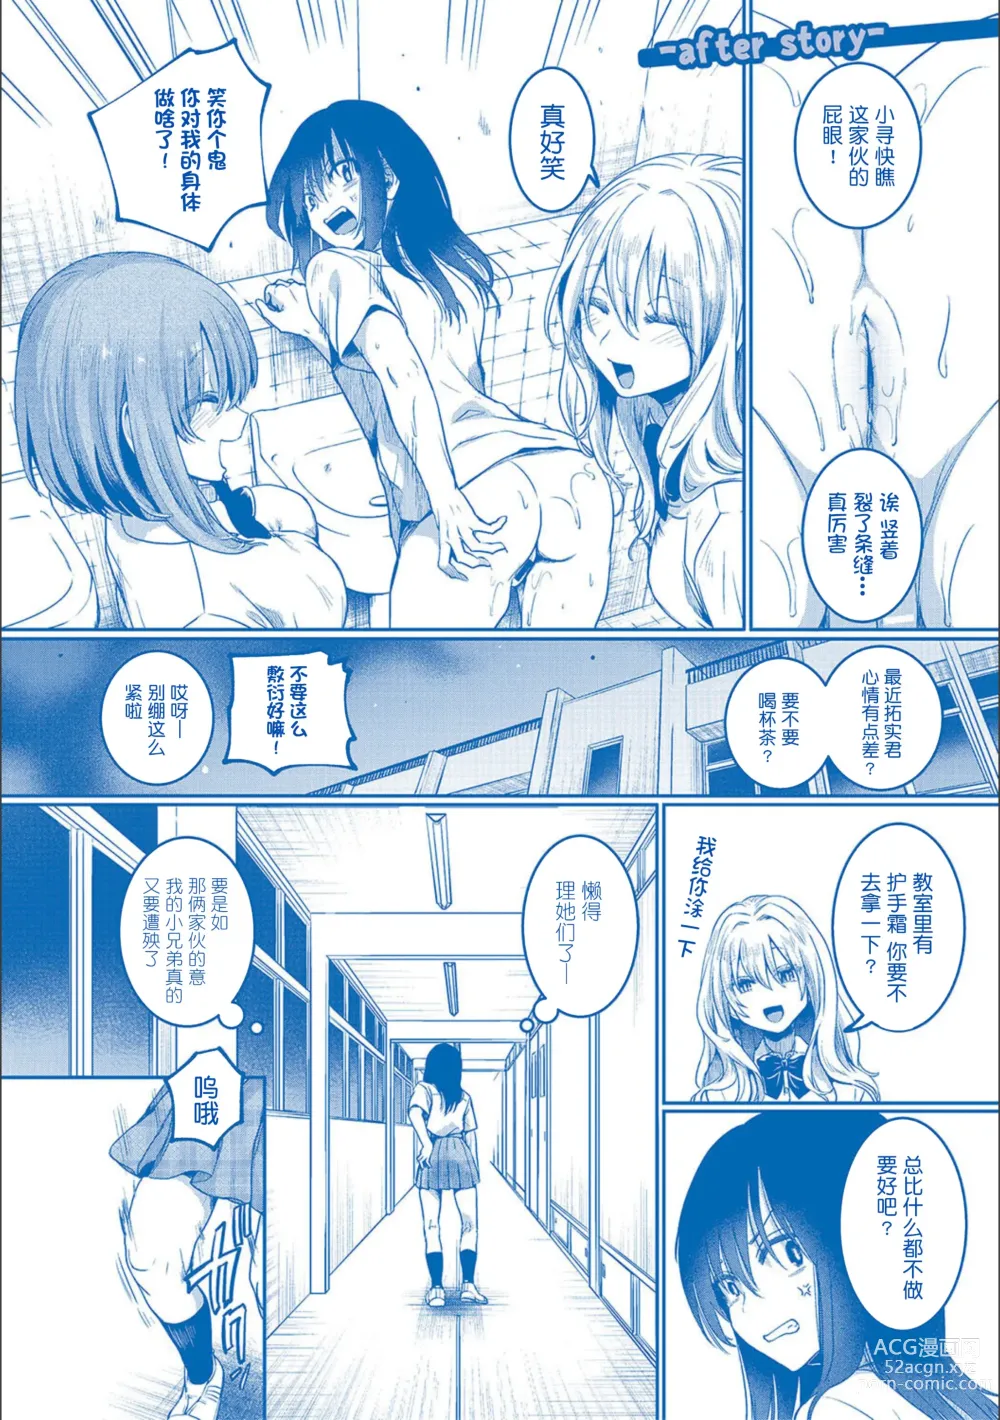 Page 209 of manga Watashi wa Onnanoko ga Suki datta Hazu nano ni - But I fell in with something different.